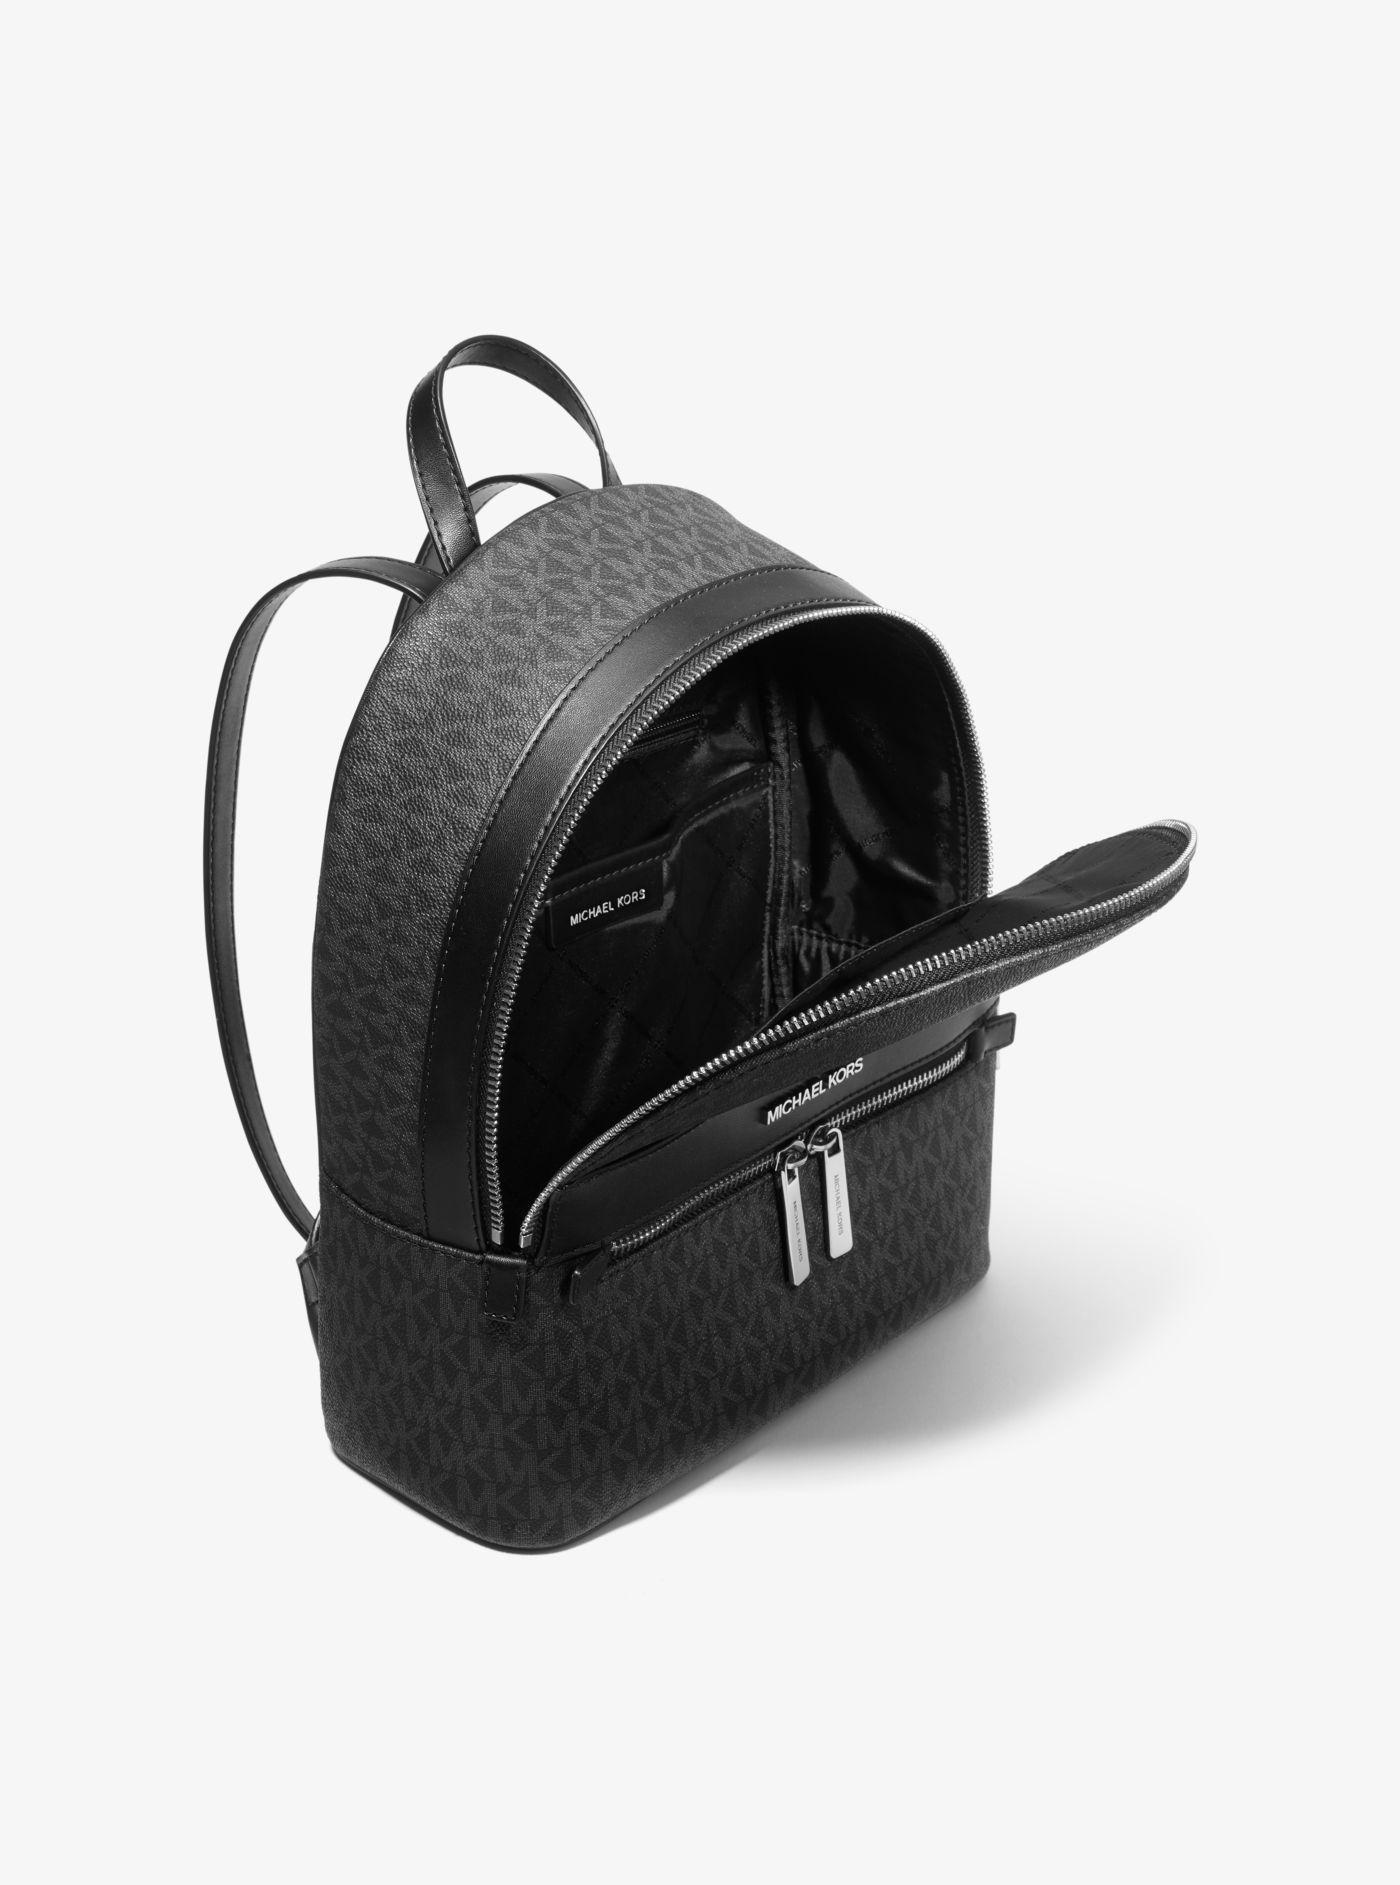 Michael Kors Kenly Medium Logo Backpack in Black | Lyst